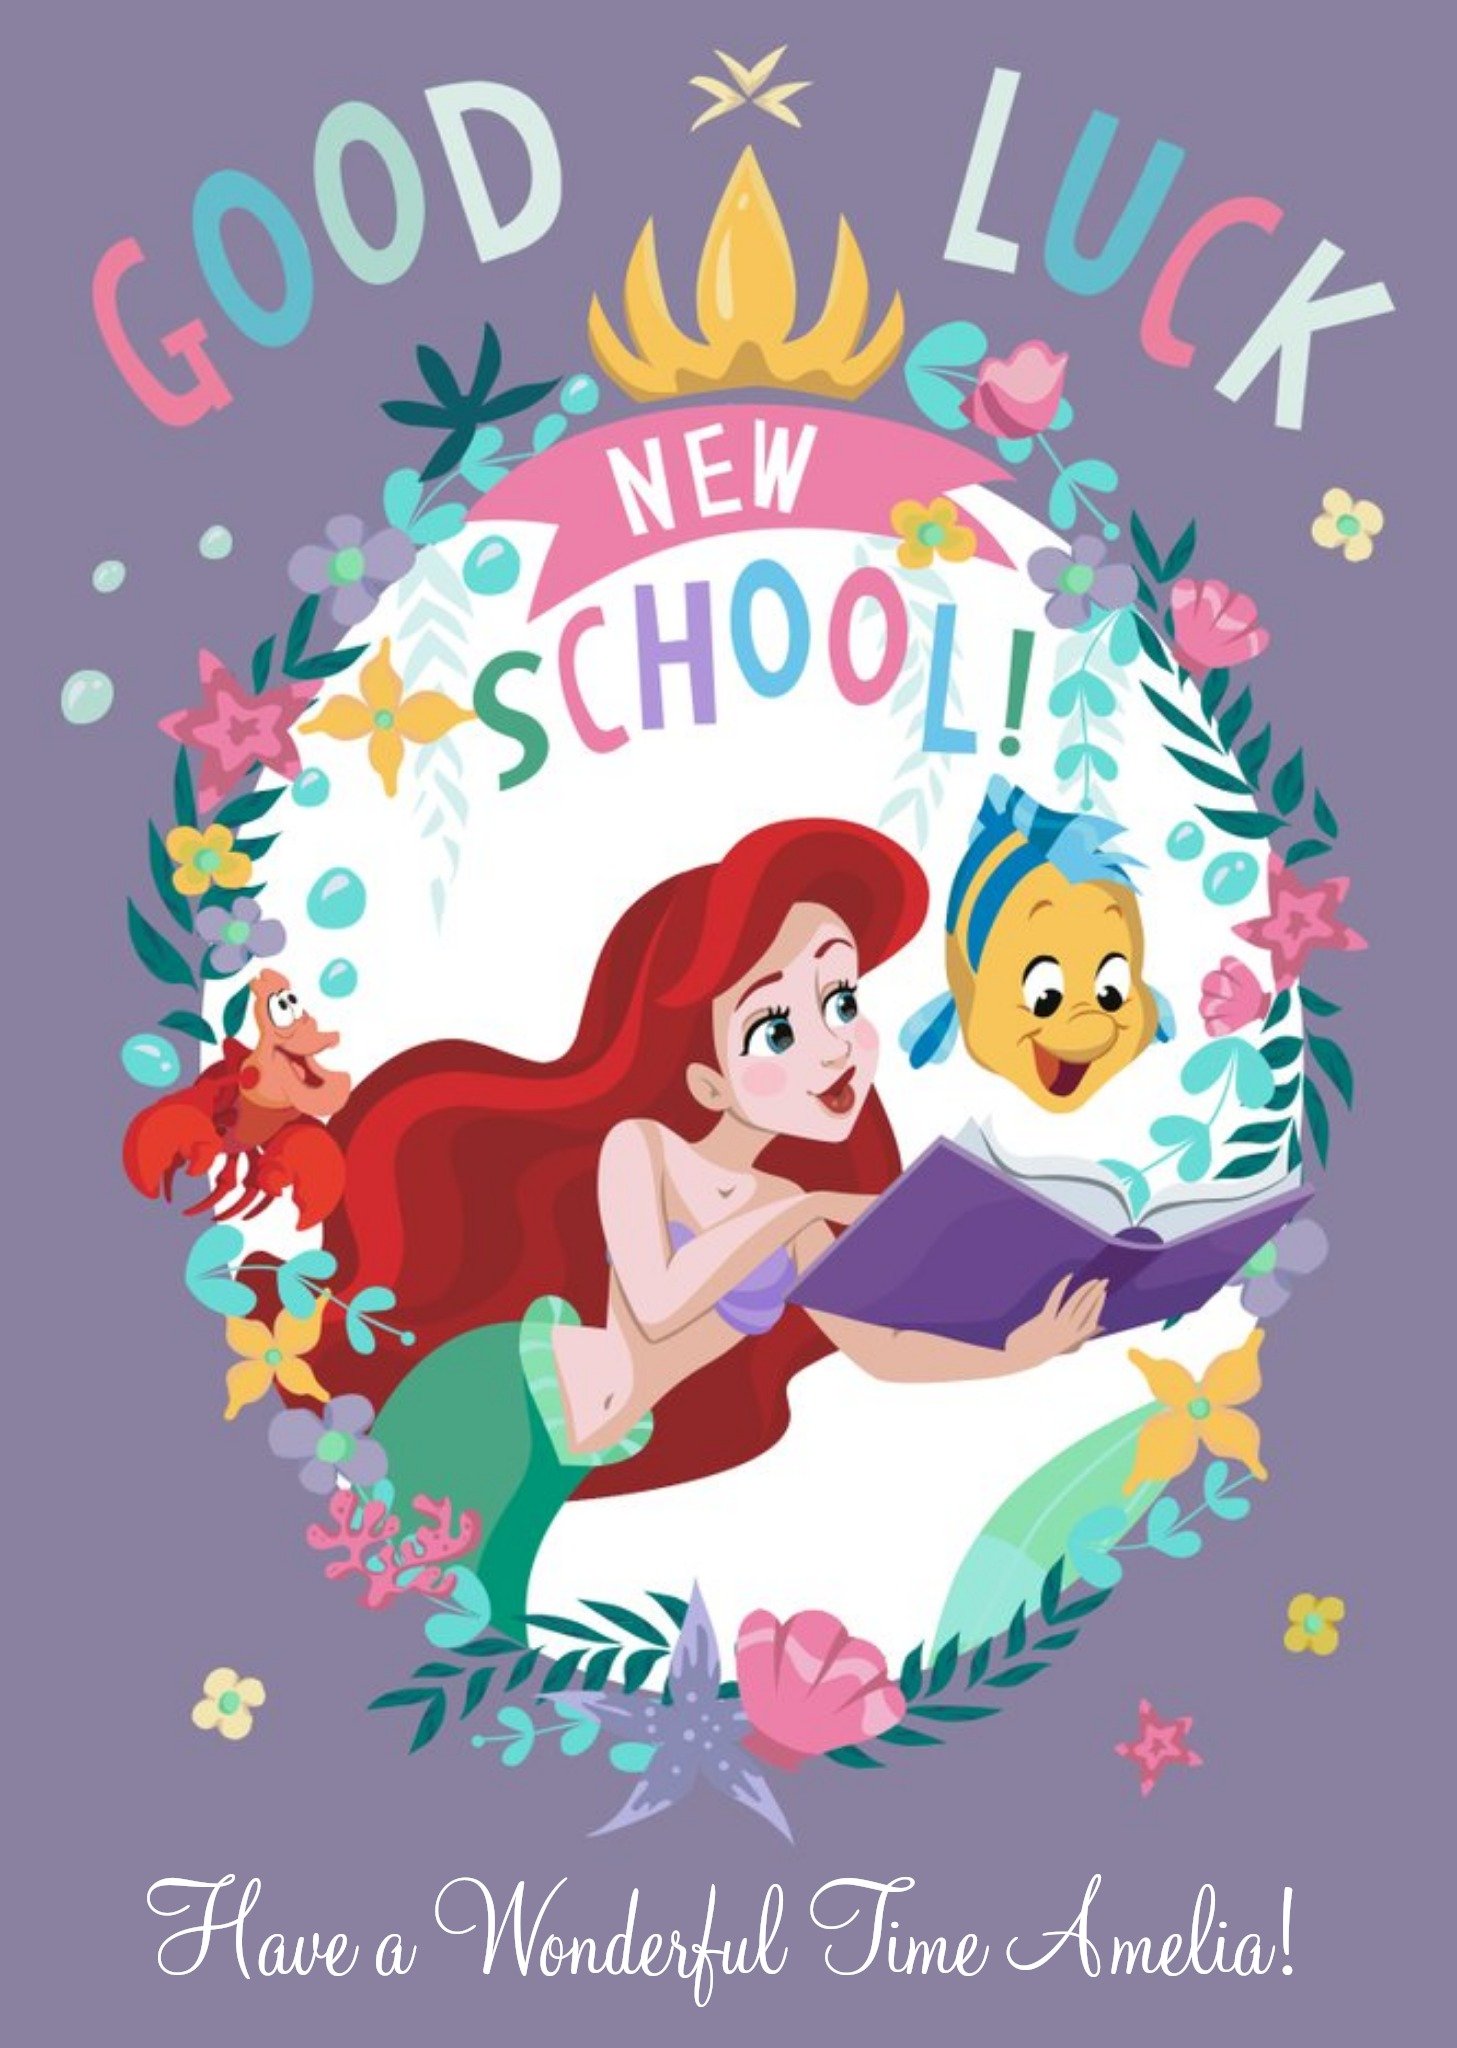 Disney Personalised Good Luck New School Little Mermaid Card, Large